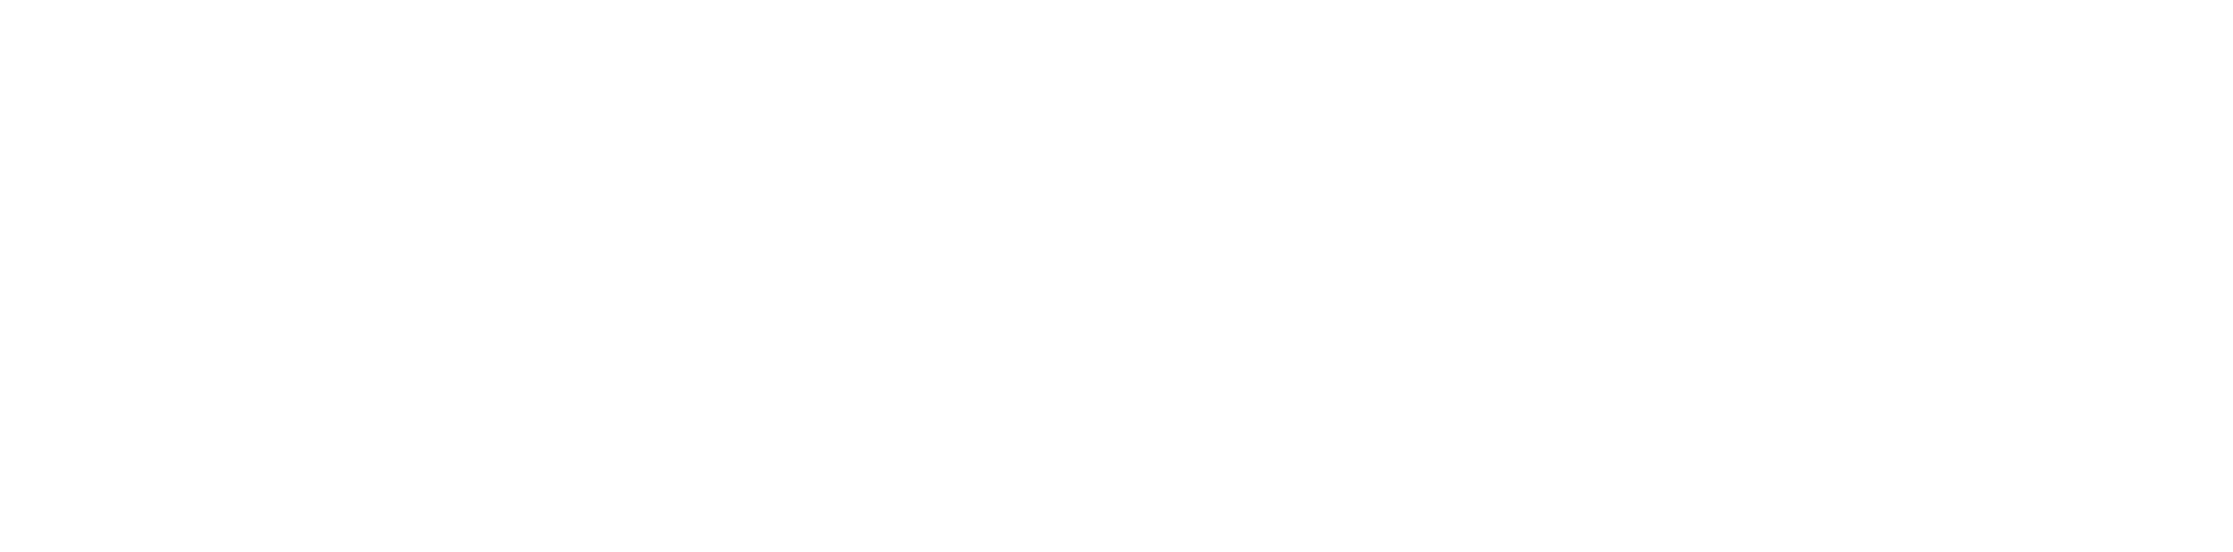 bloomreach_logo_white.png